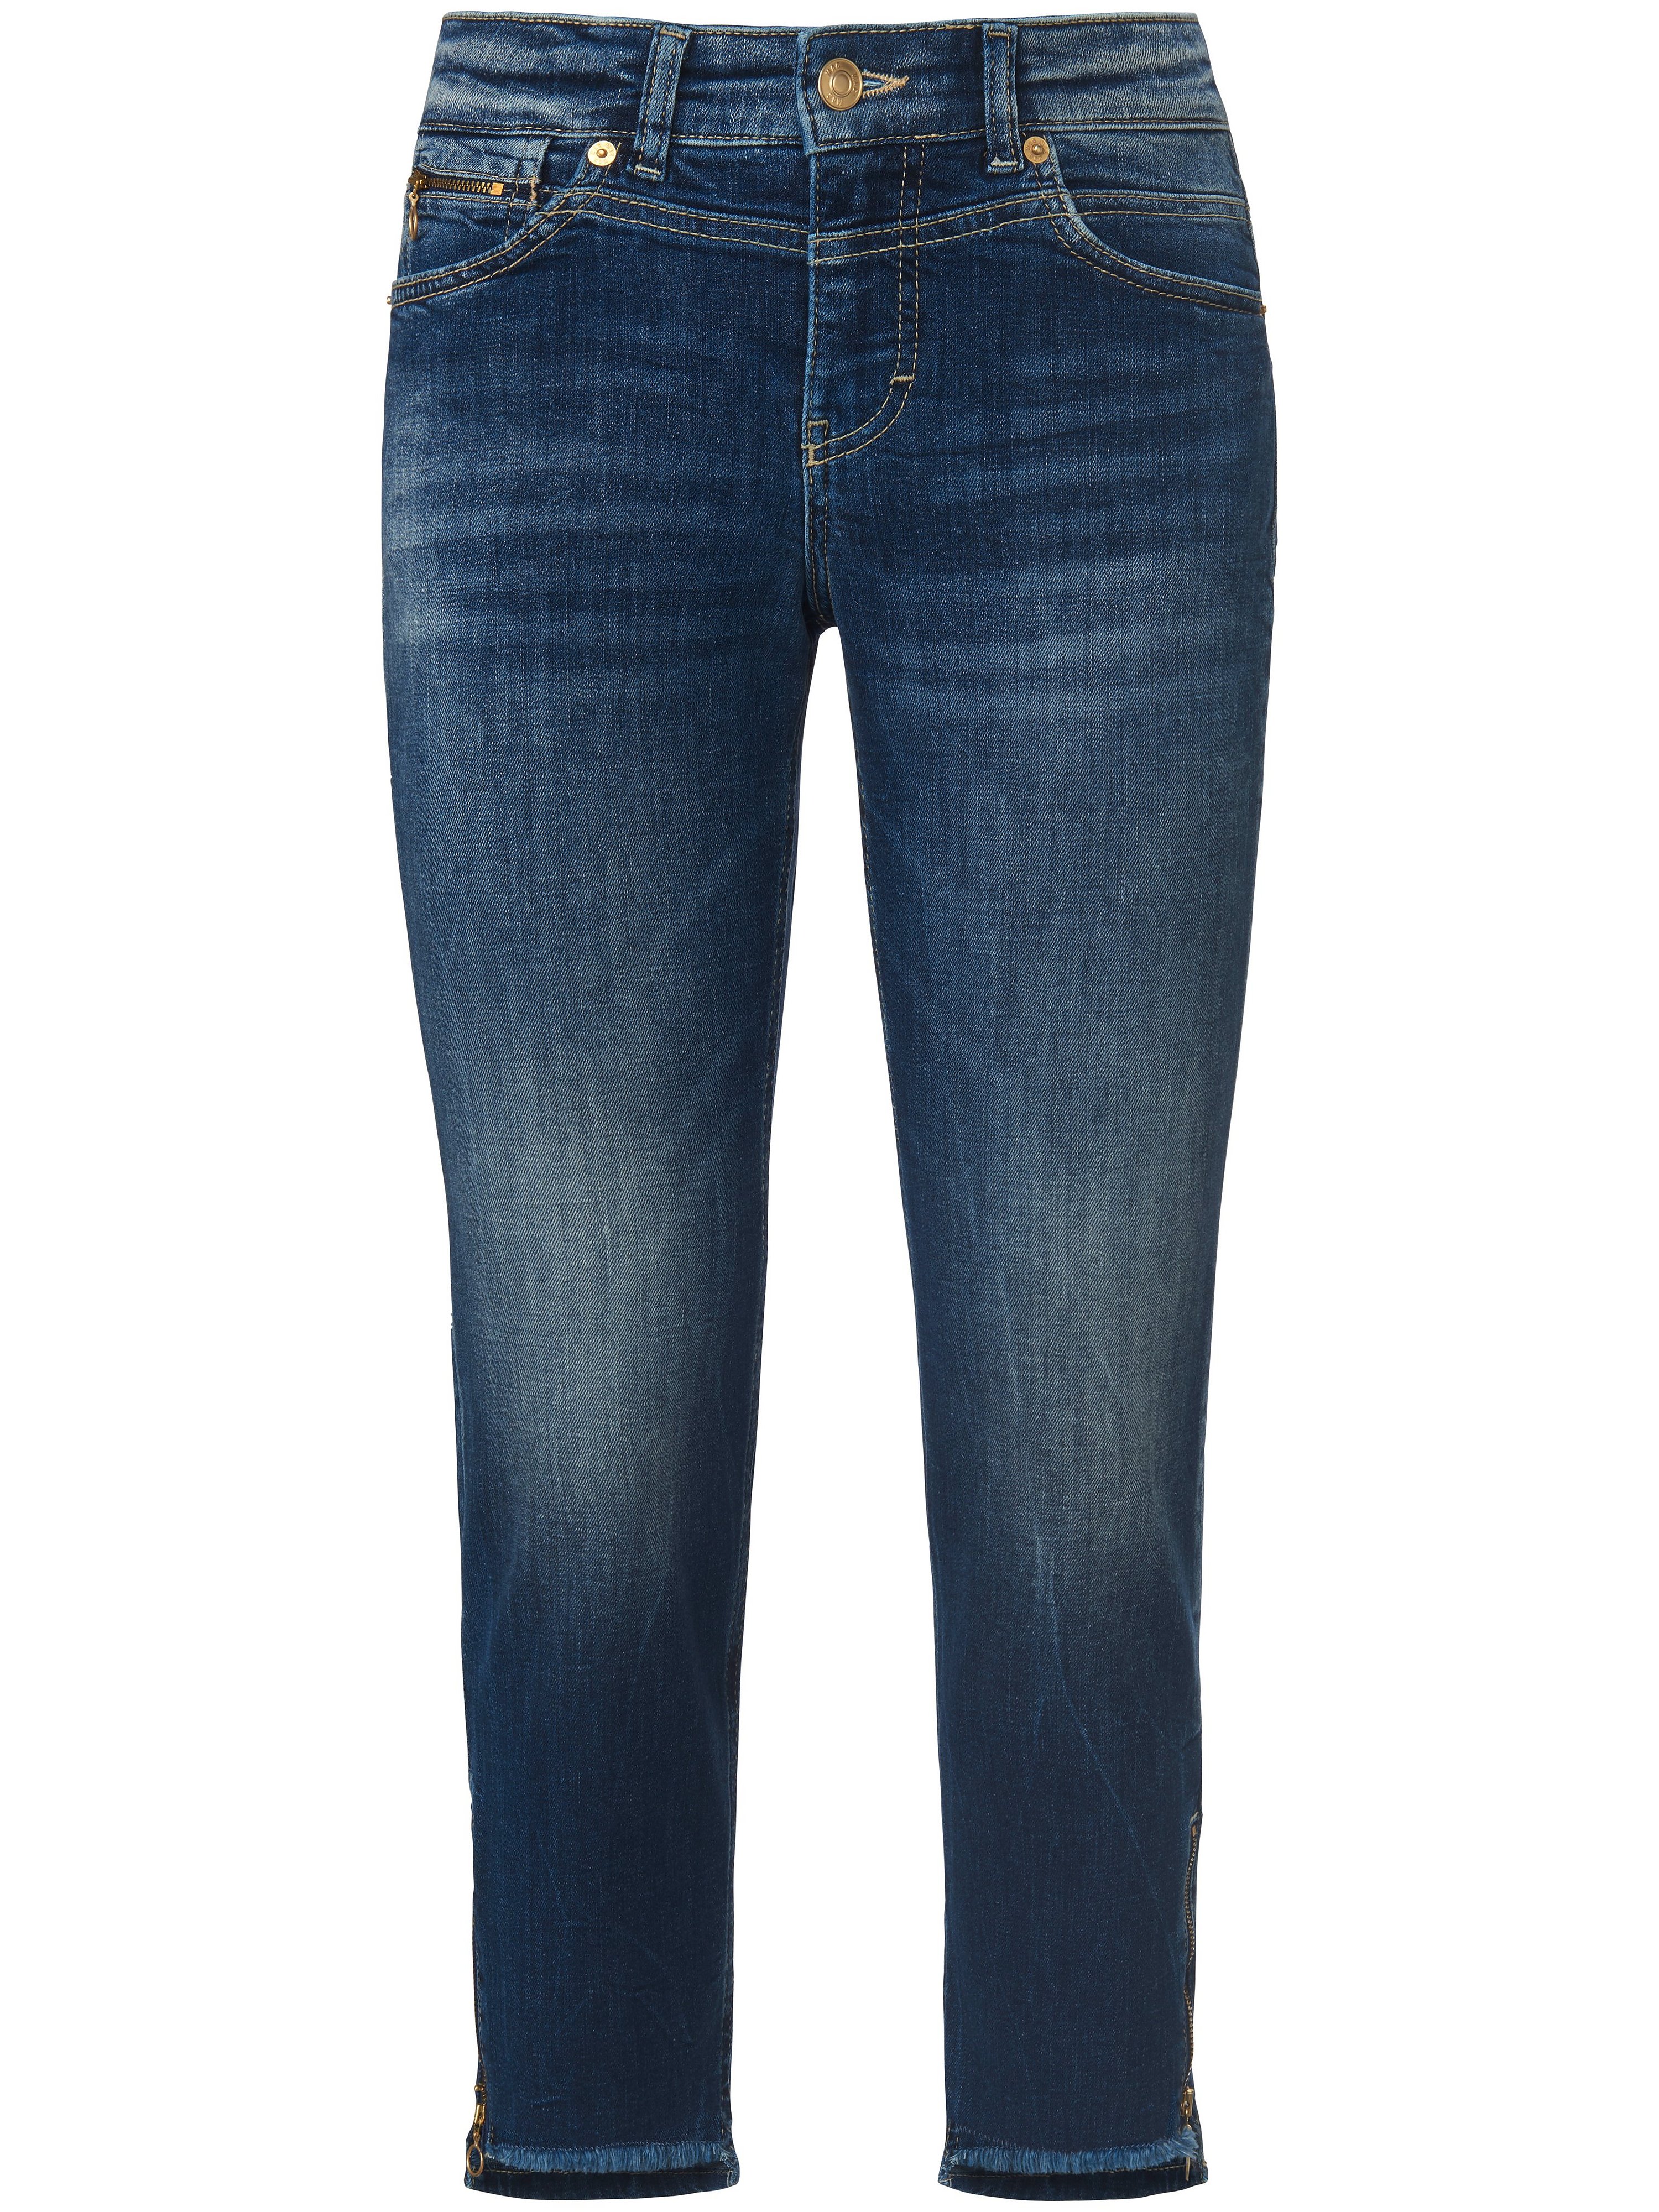 Le jean  Mac bleu